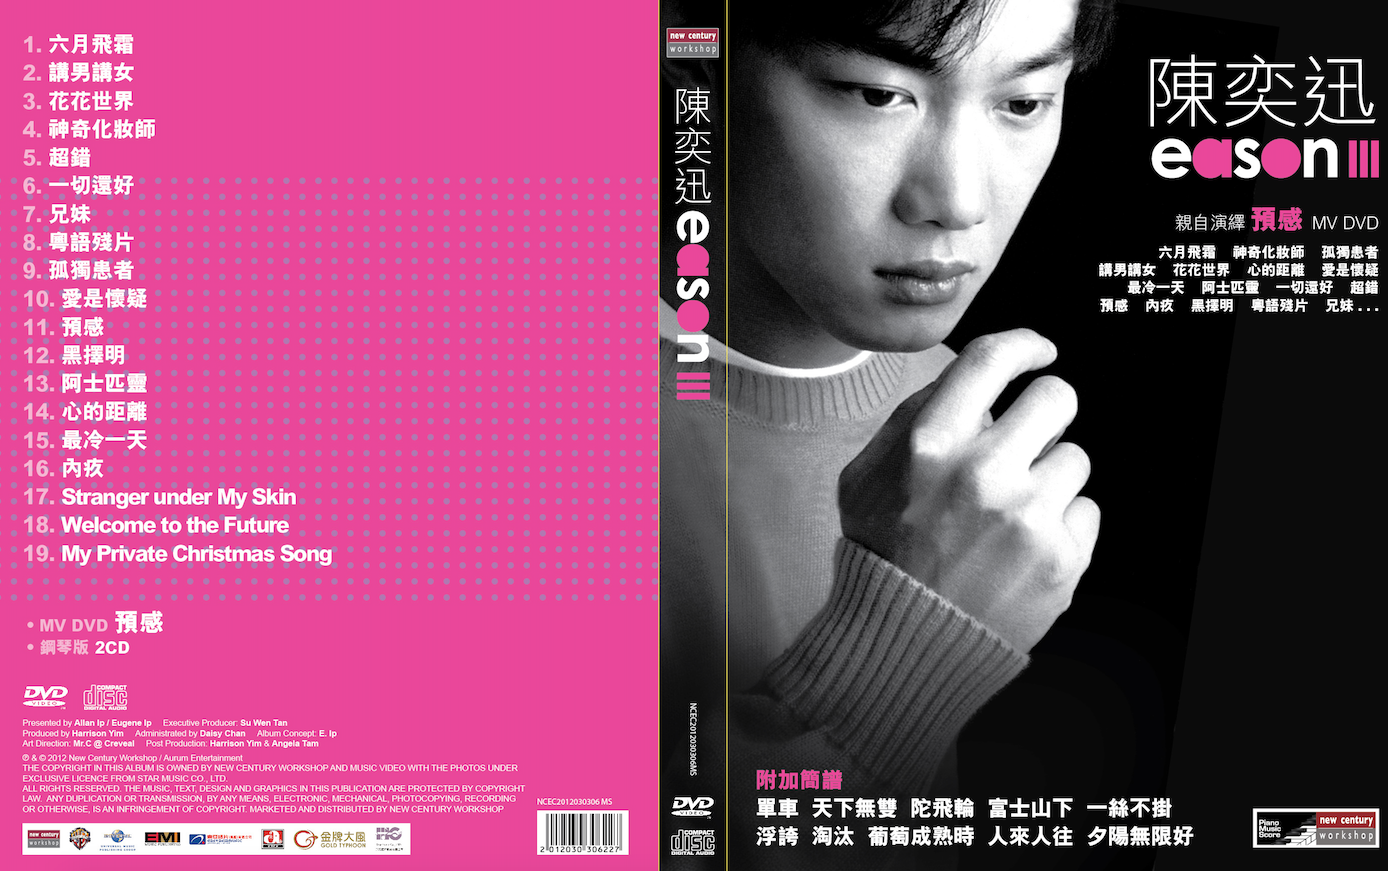 陳奕迅 Eason Ill 附 Instrumental Versions CD + MV DVD